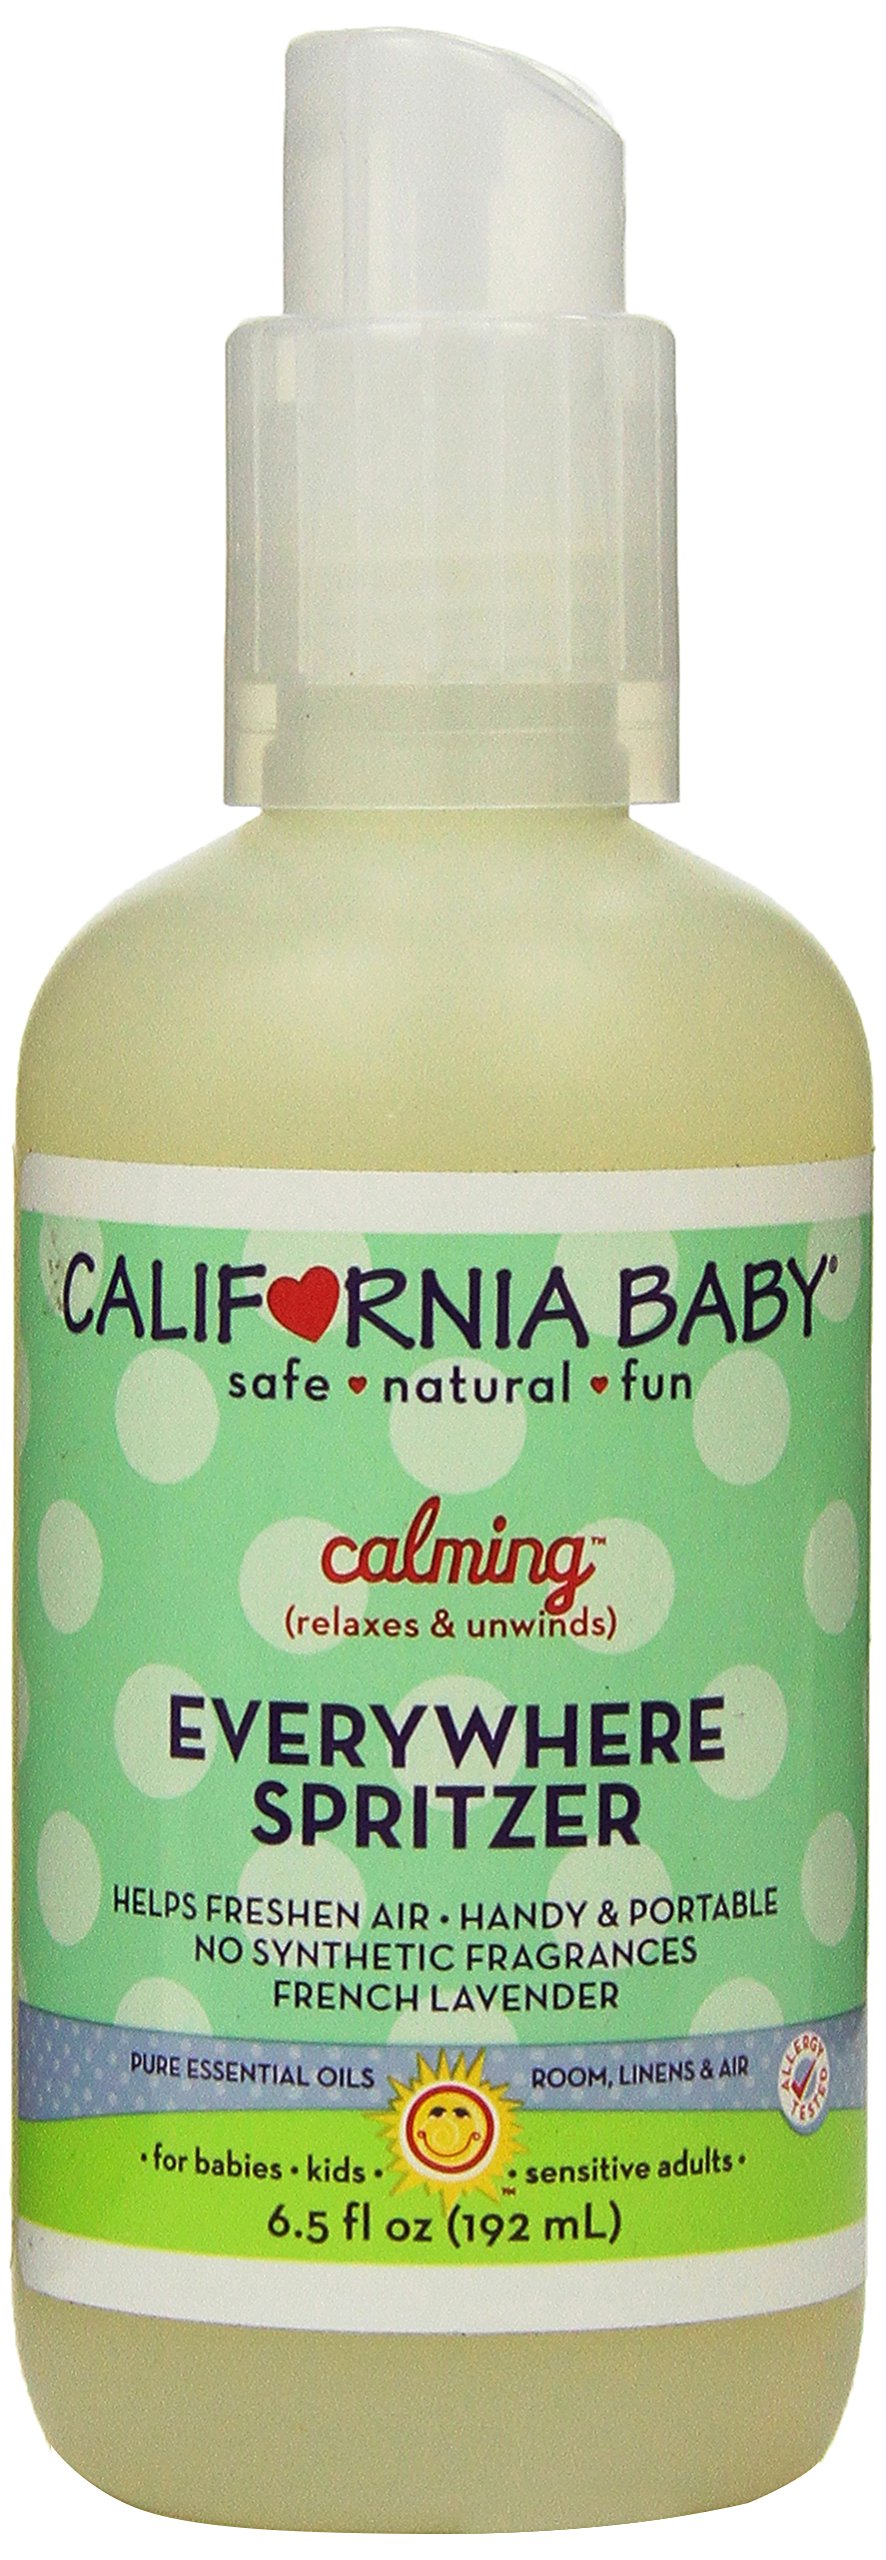 California Baby Calming Spritzer - 6.5 fl oz